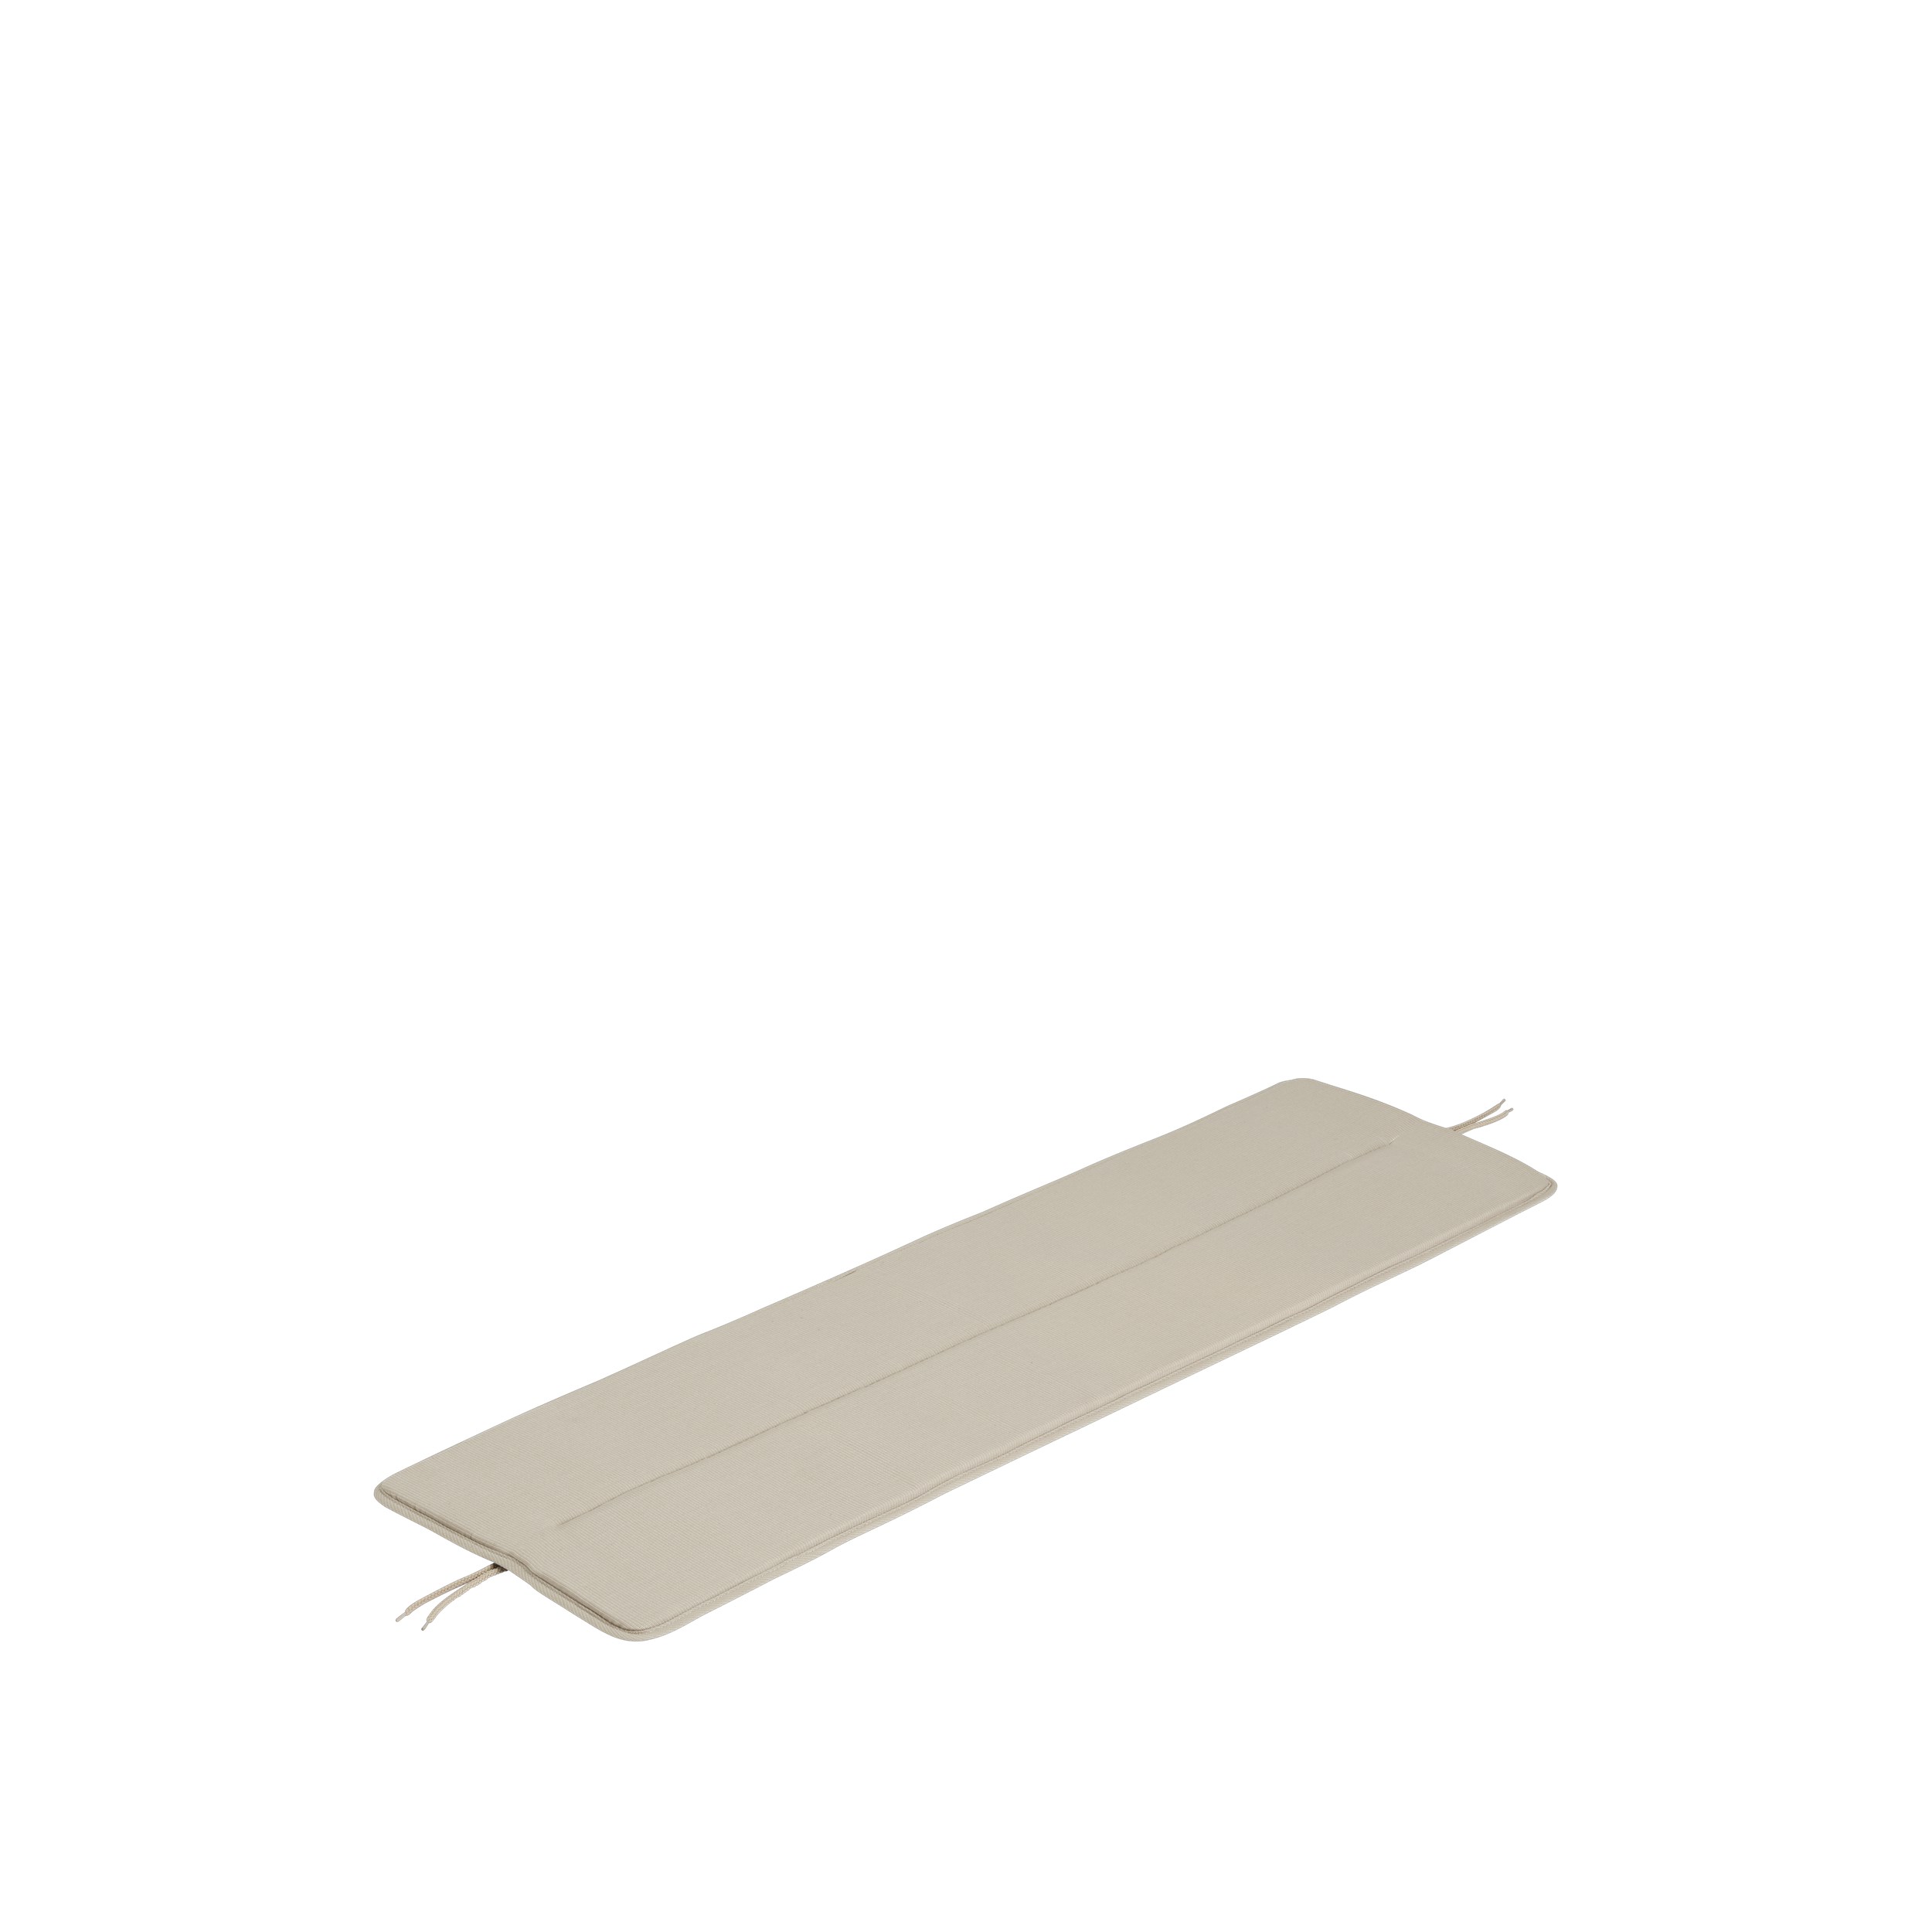 Linear Steel bench seat pad, 110 cm